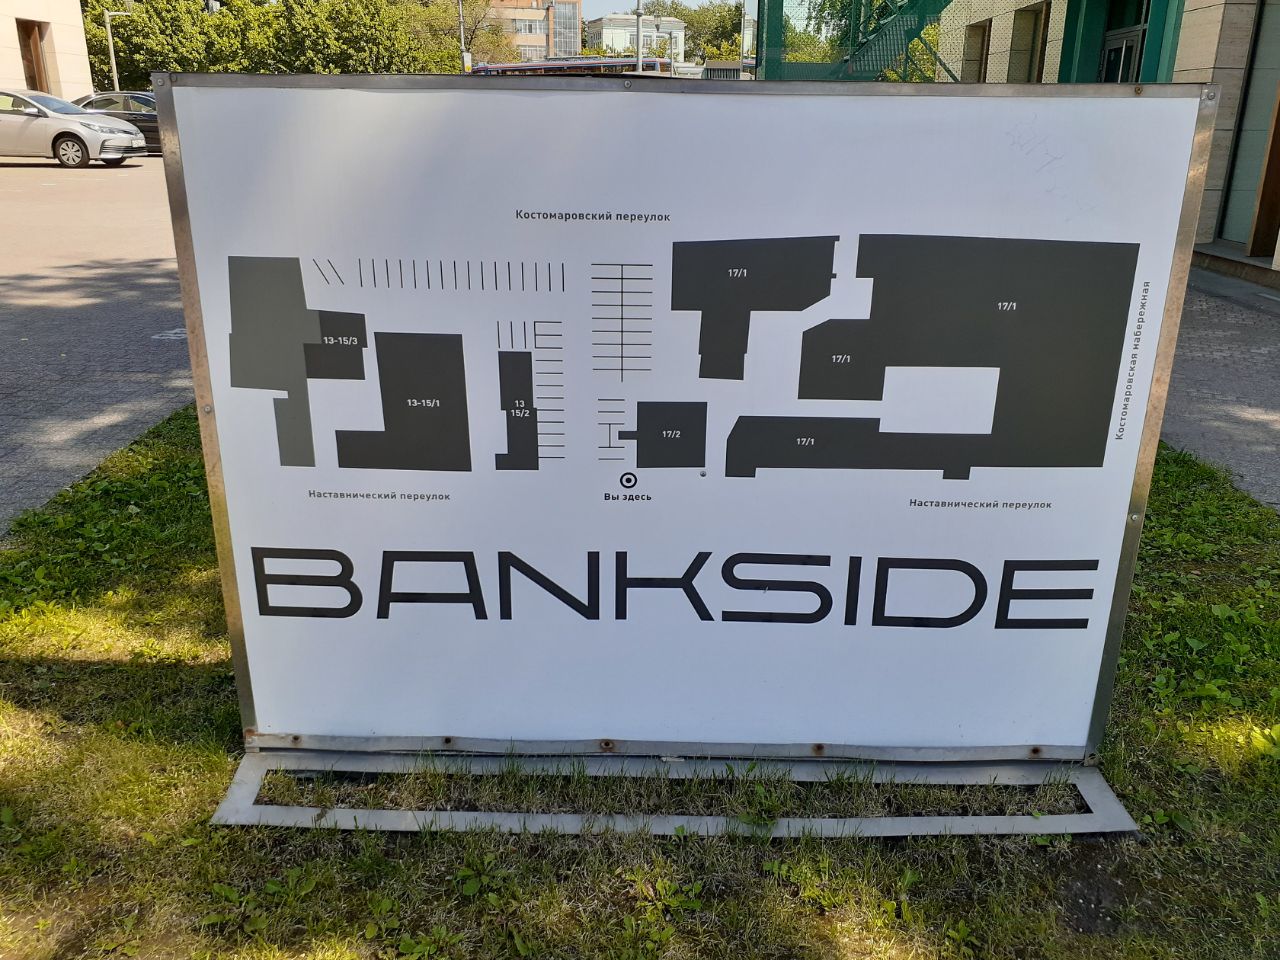 Бизнес Центр Bankside (Бэнксайд) (17с1)